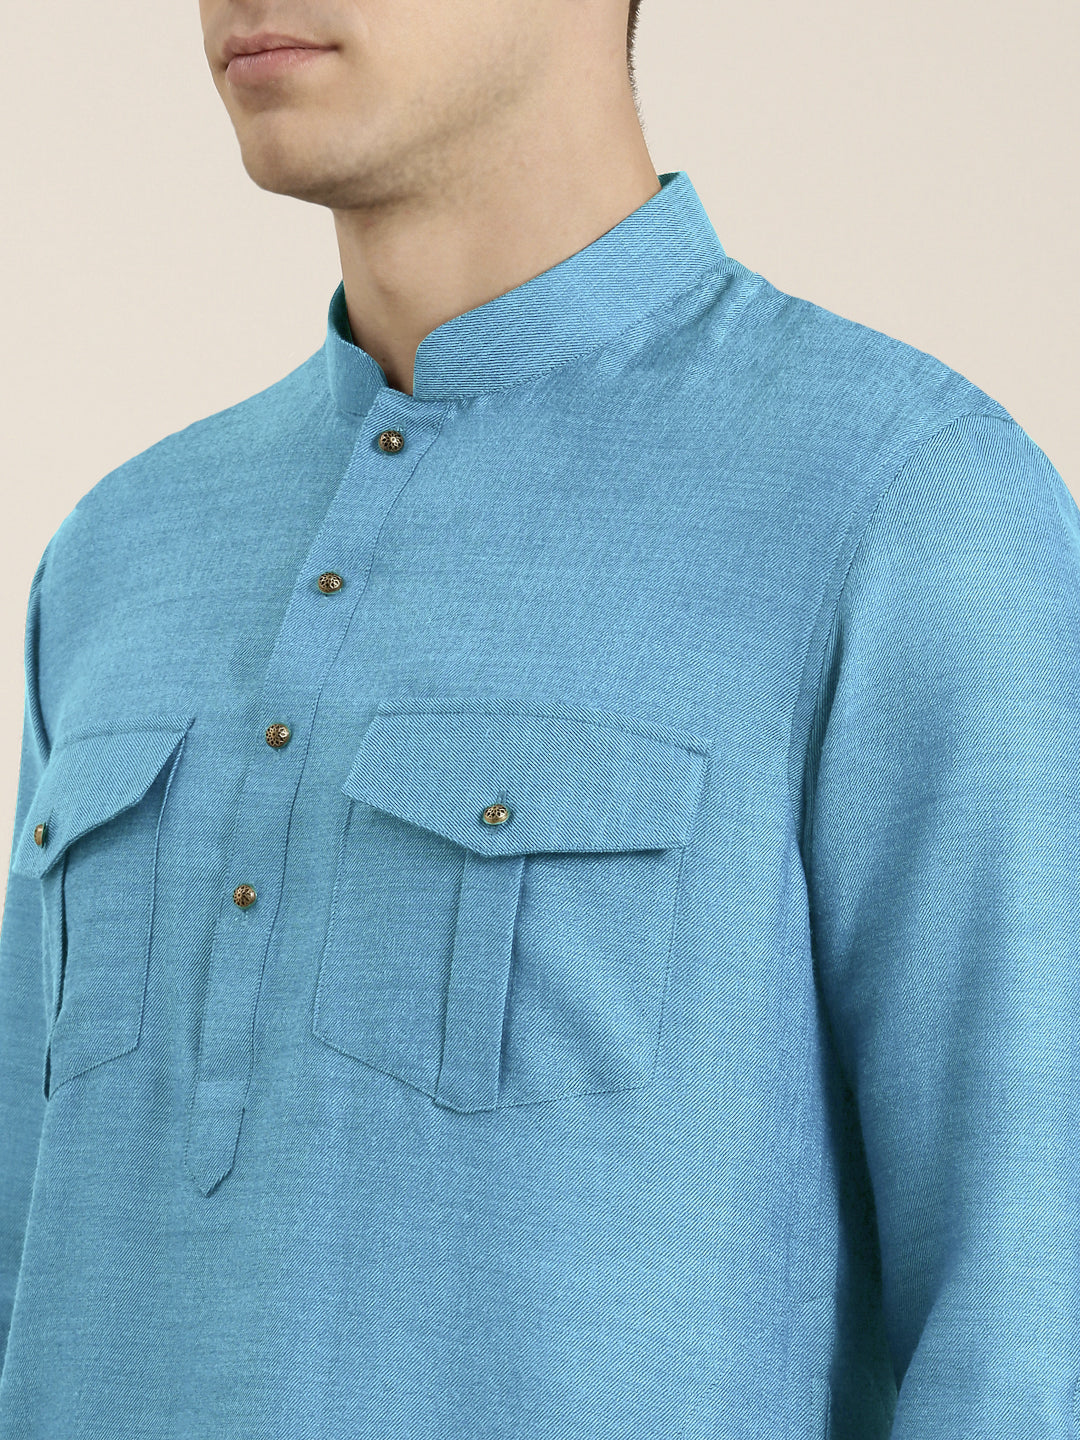 Blue Light cotton Short Pathani